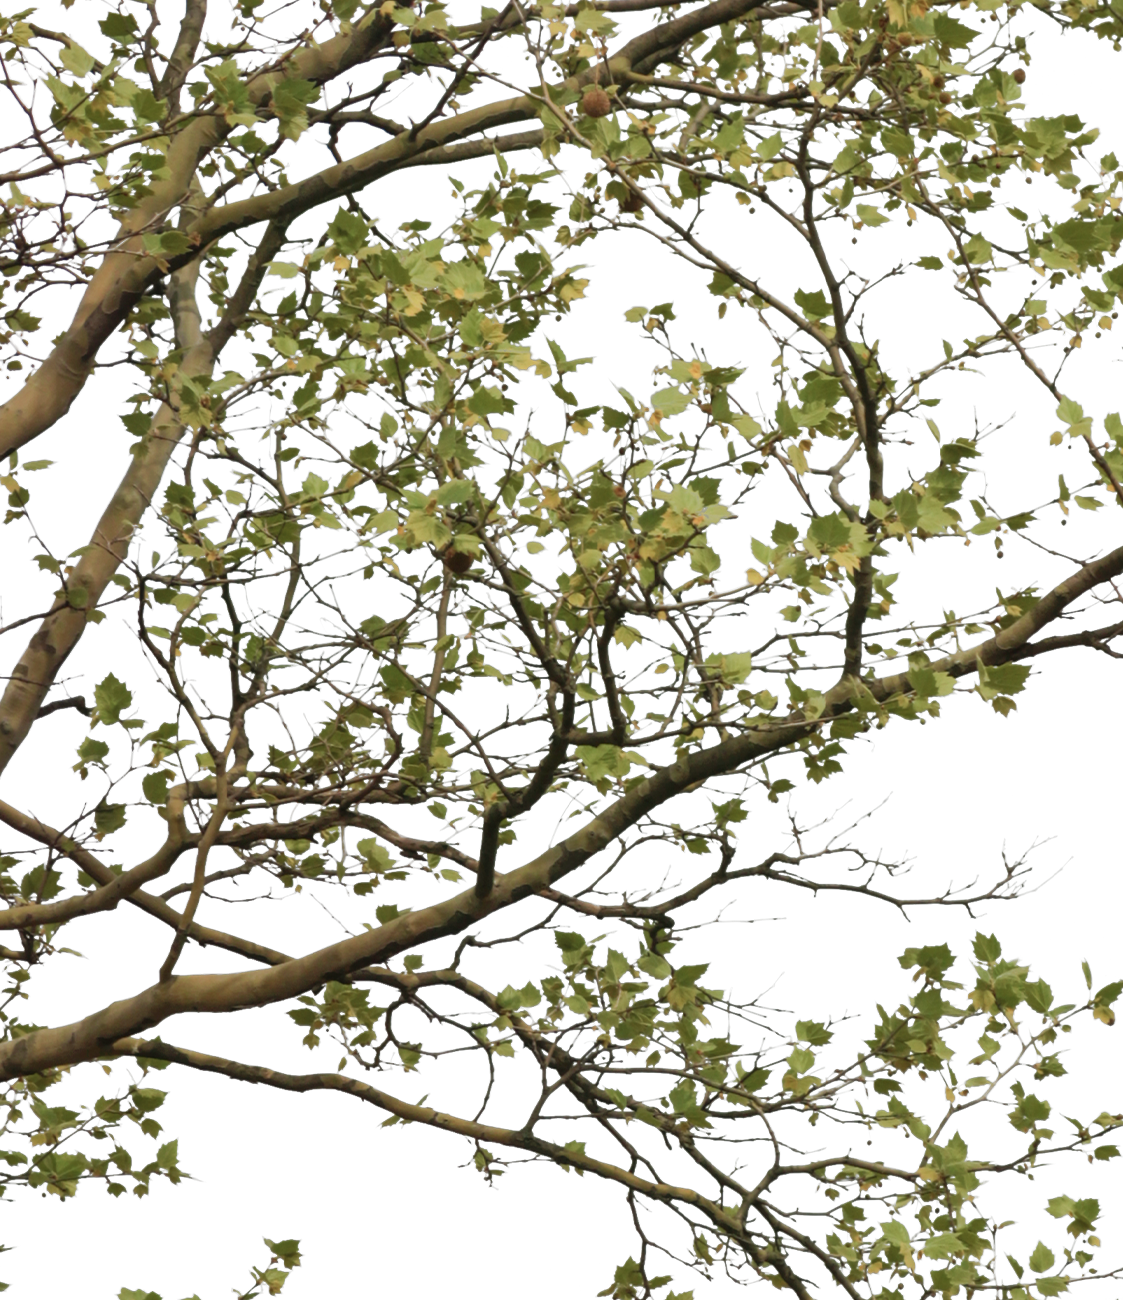 Platanus acerifolia m05 - cutout trees